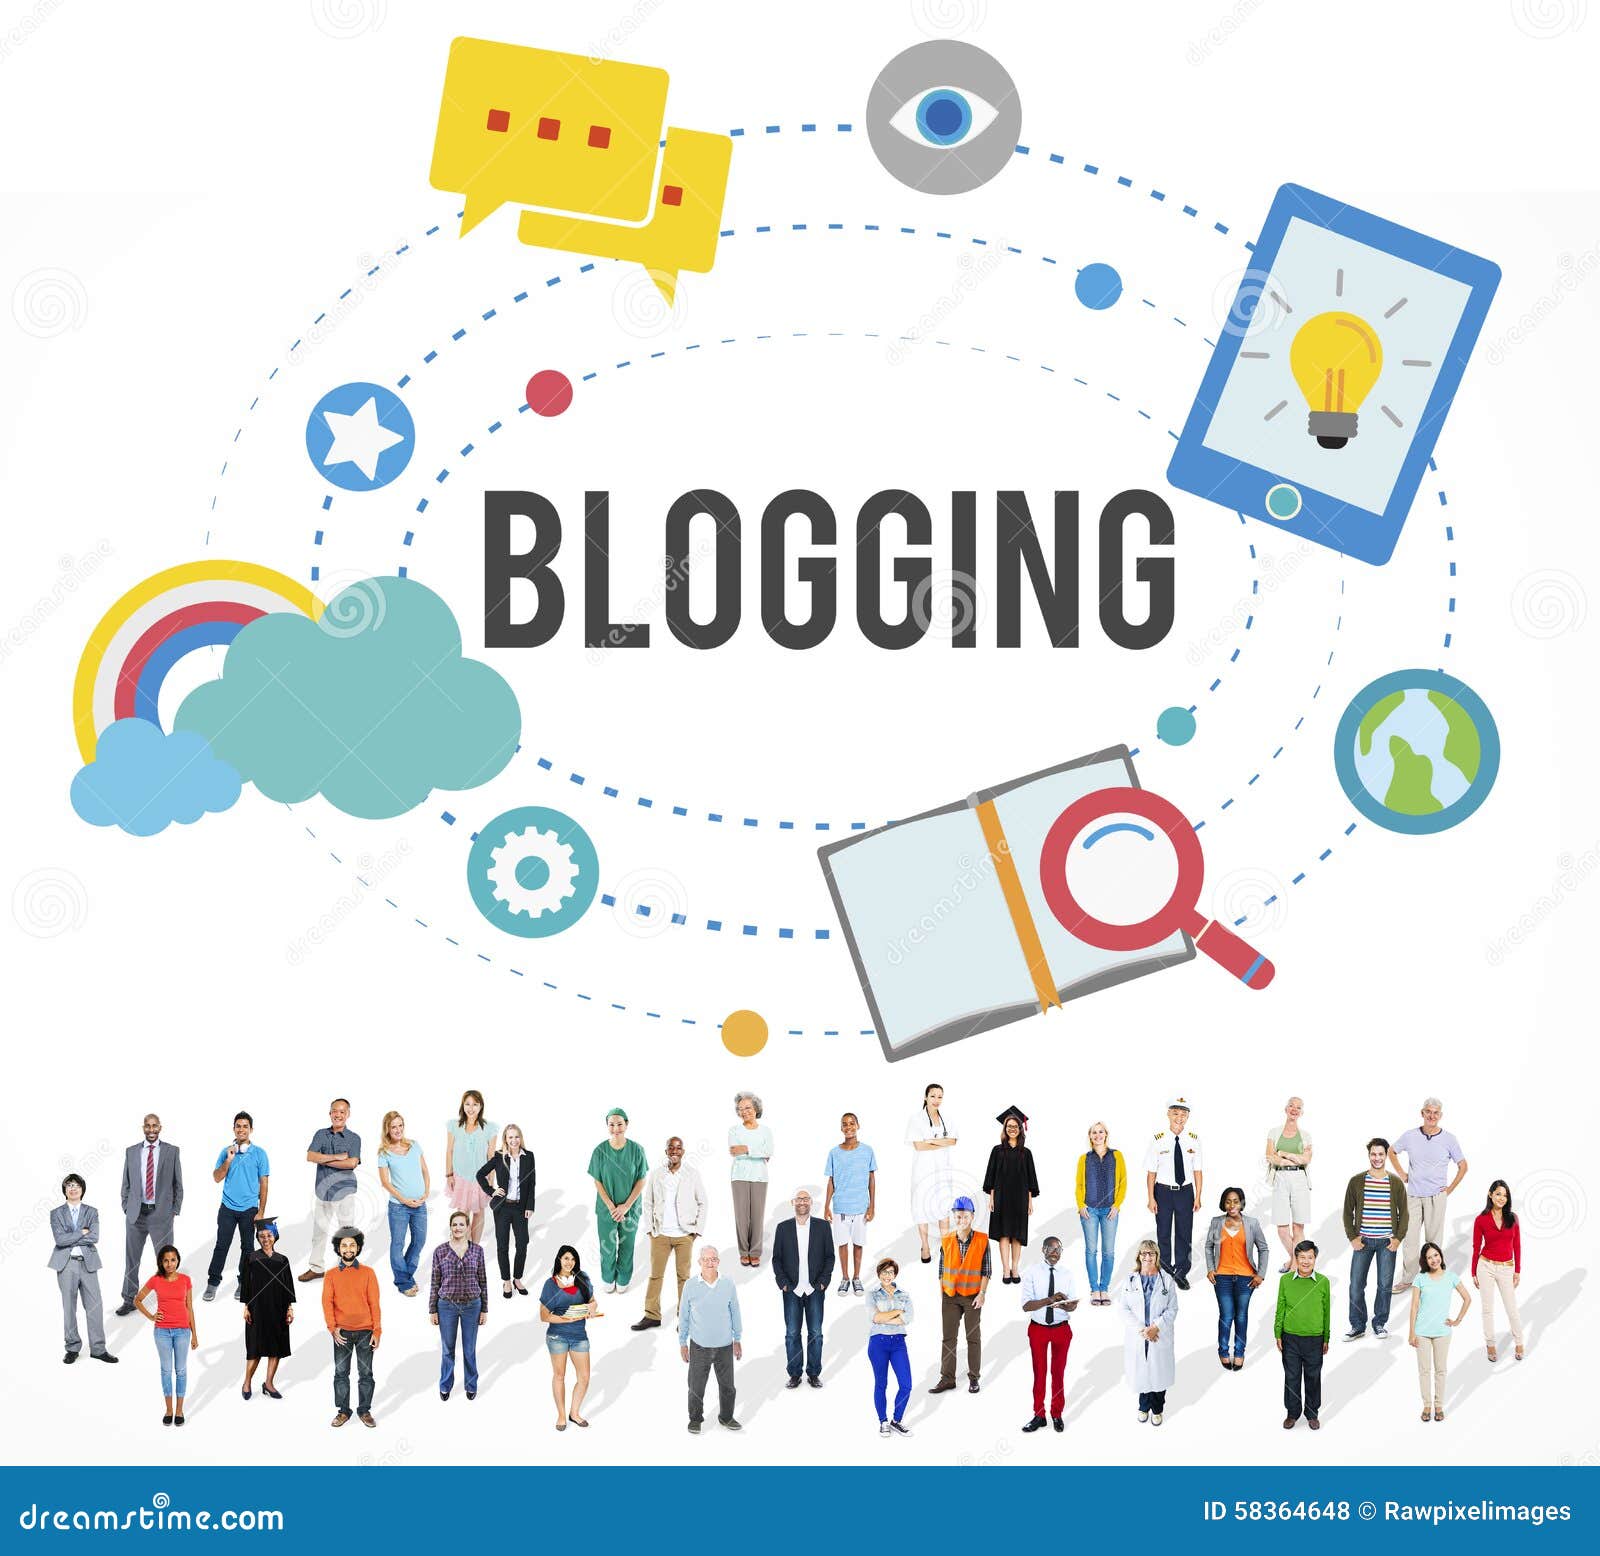 blogging blog internet media networking social concept